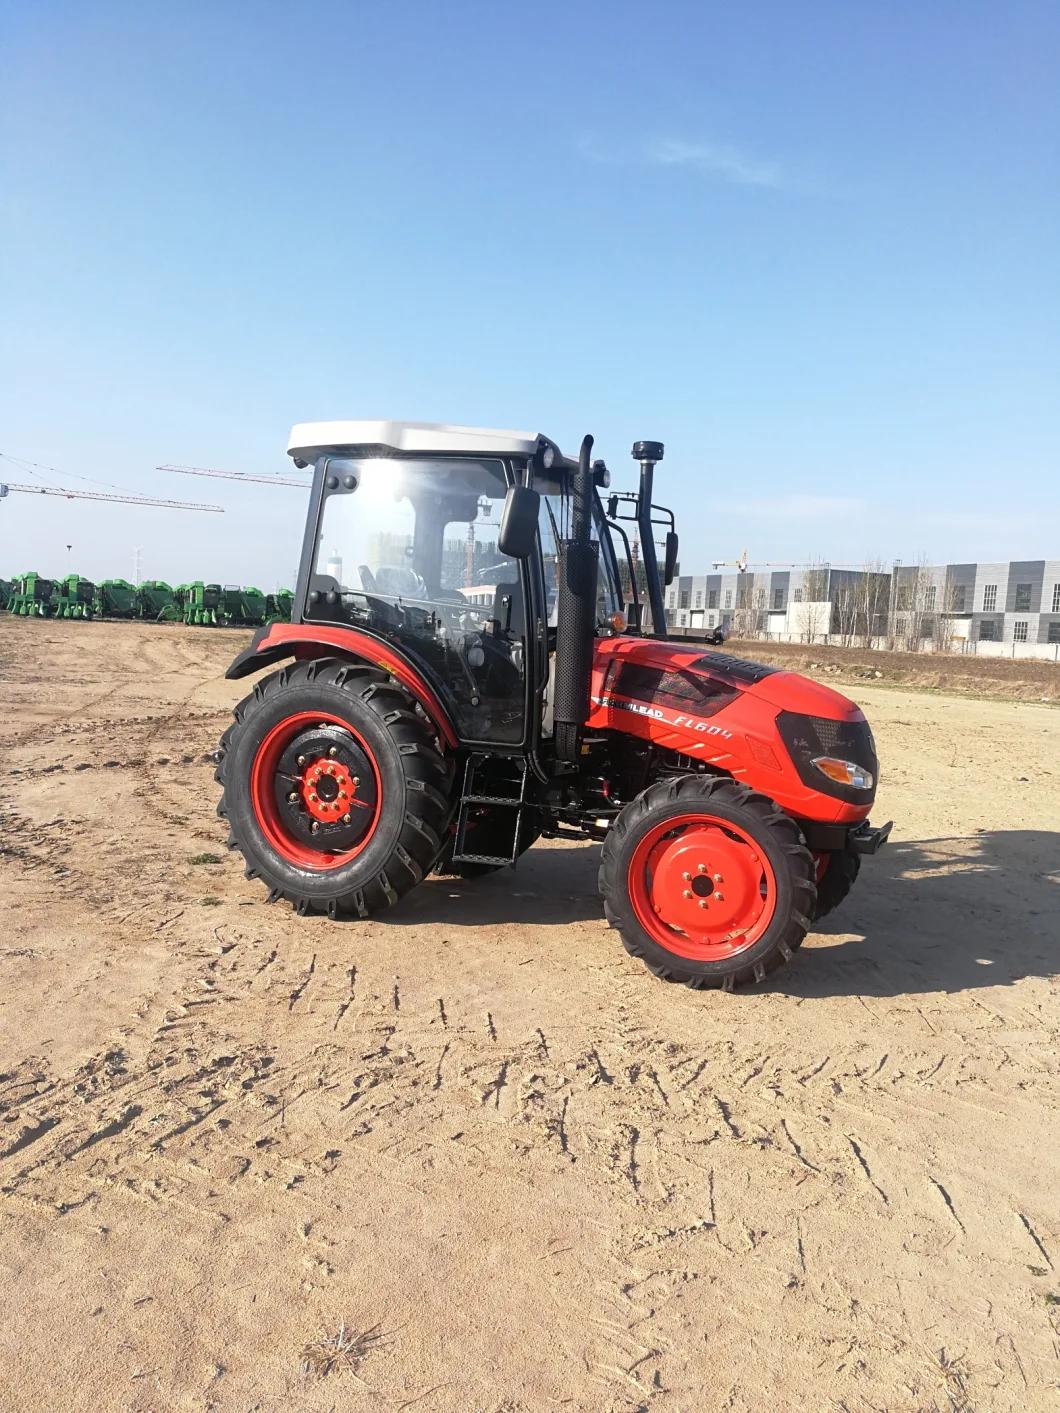 Farmlead Farm Tractors with Yc Turbo Perkins Engine Technology